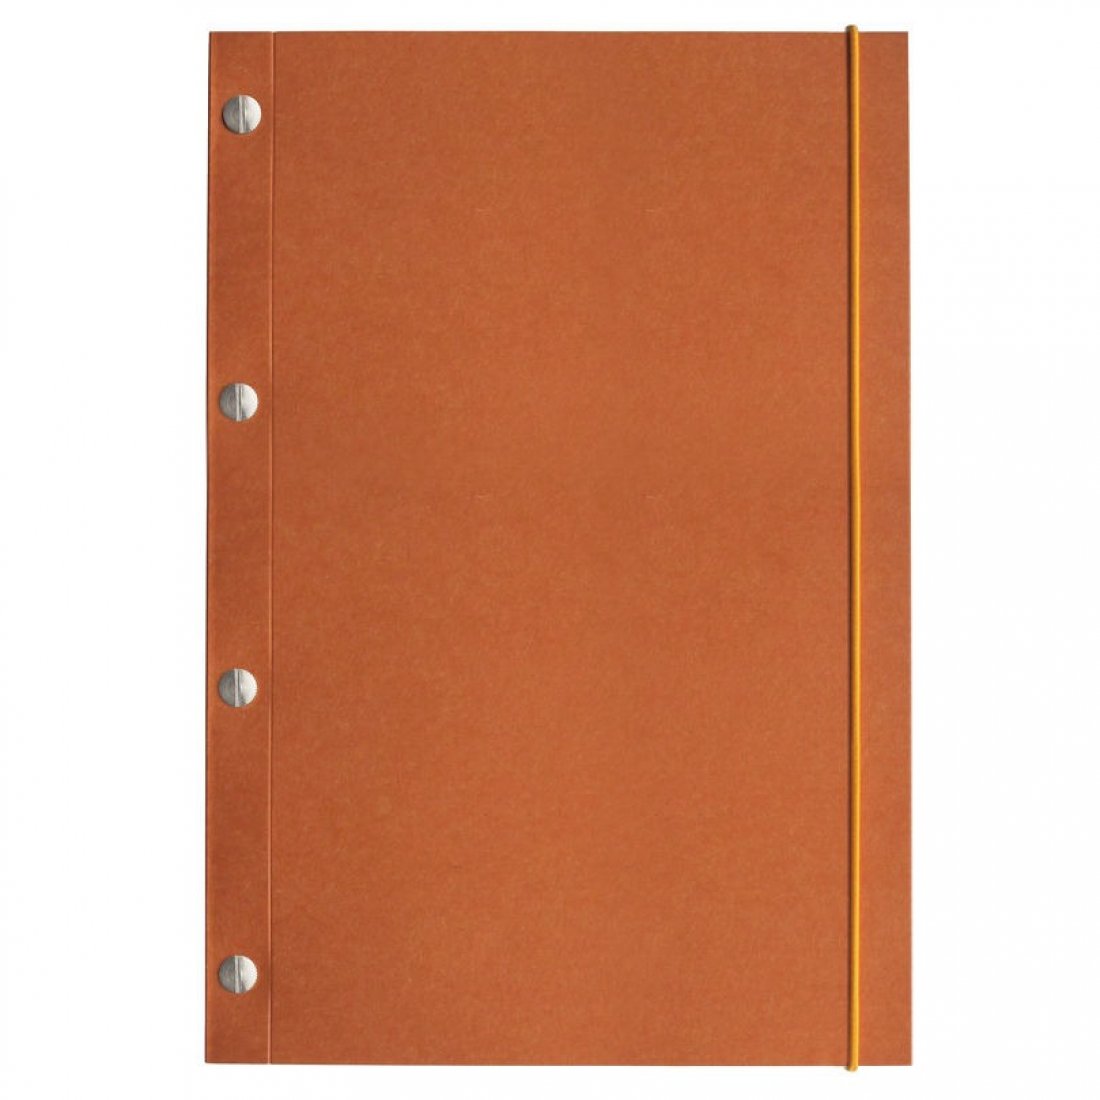 A4 Kraft Notebook - Italian Orange